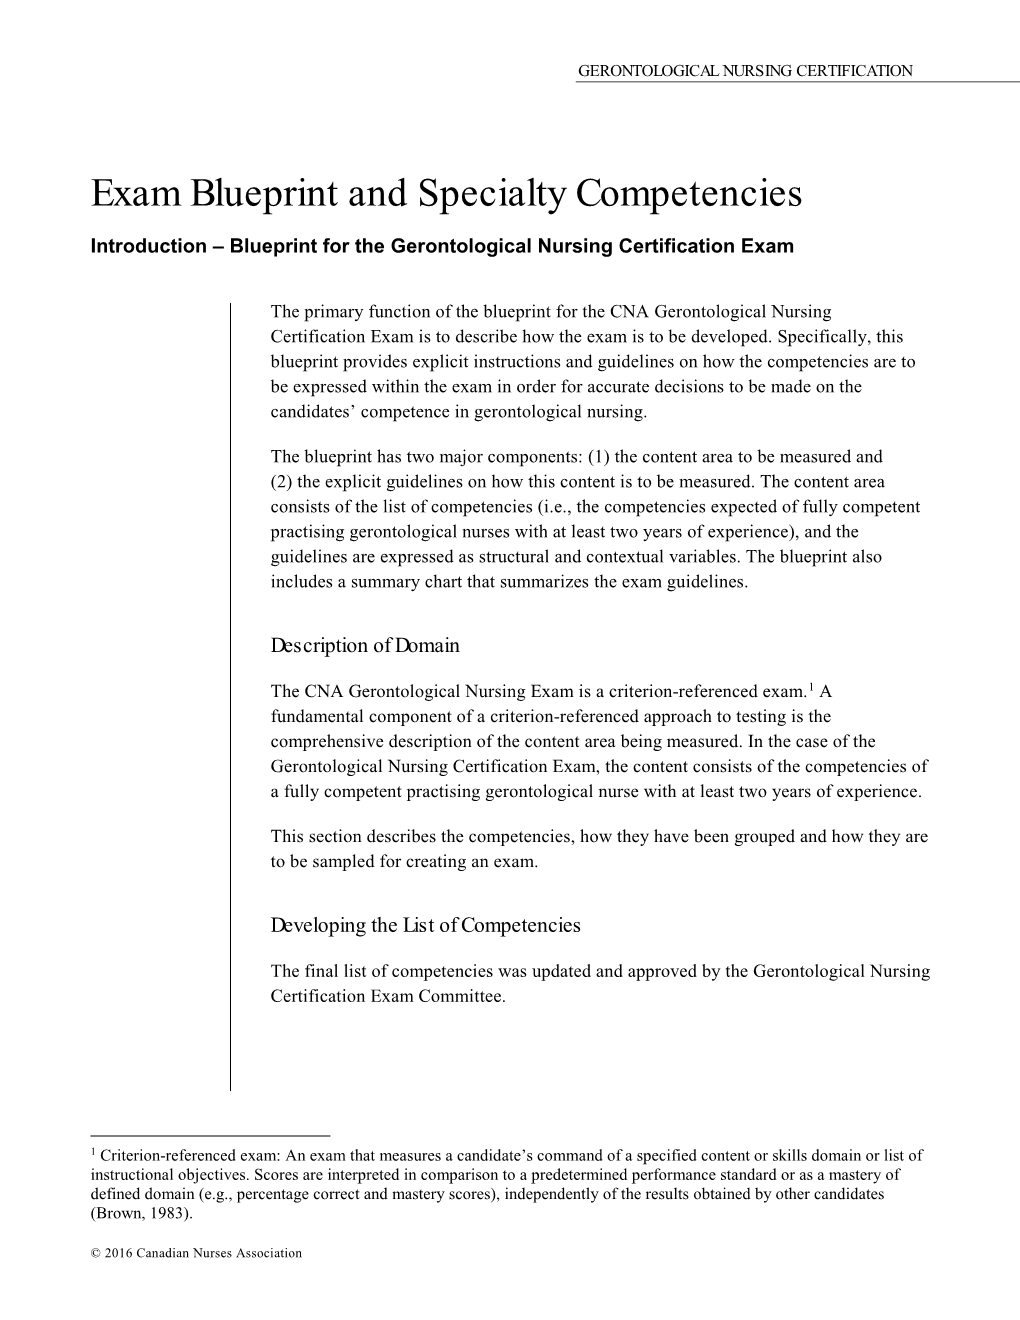 Blueprint for the Gerontological Nursing Certification Exam